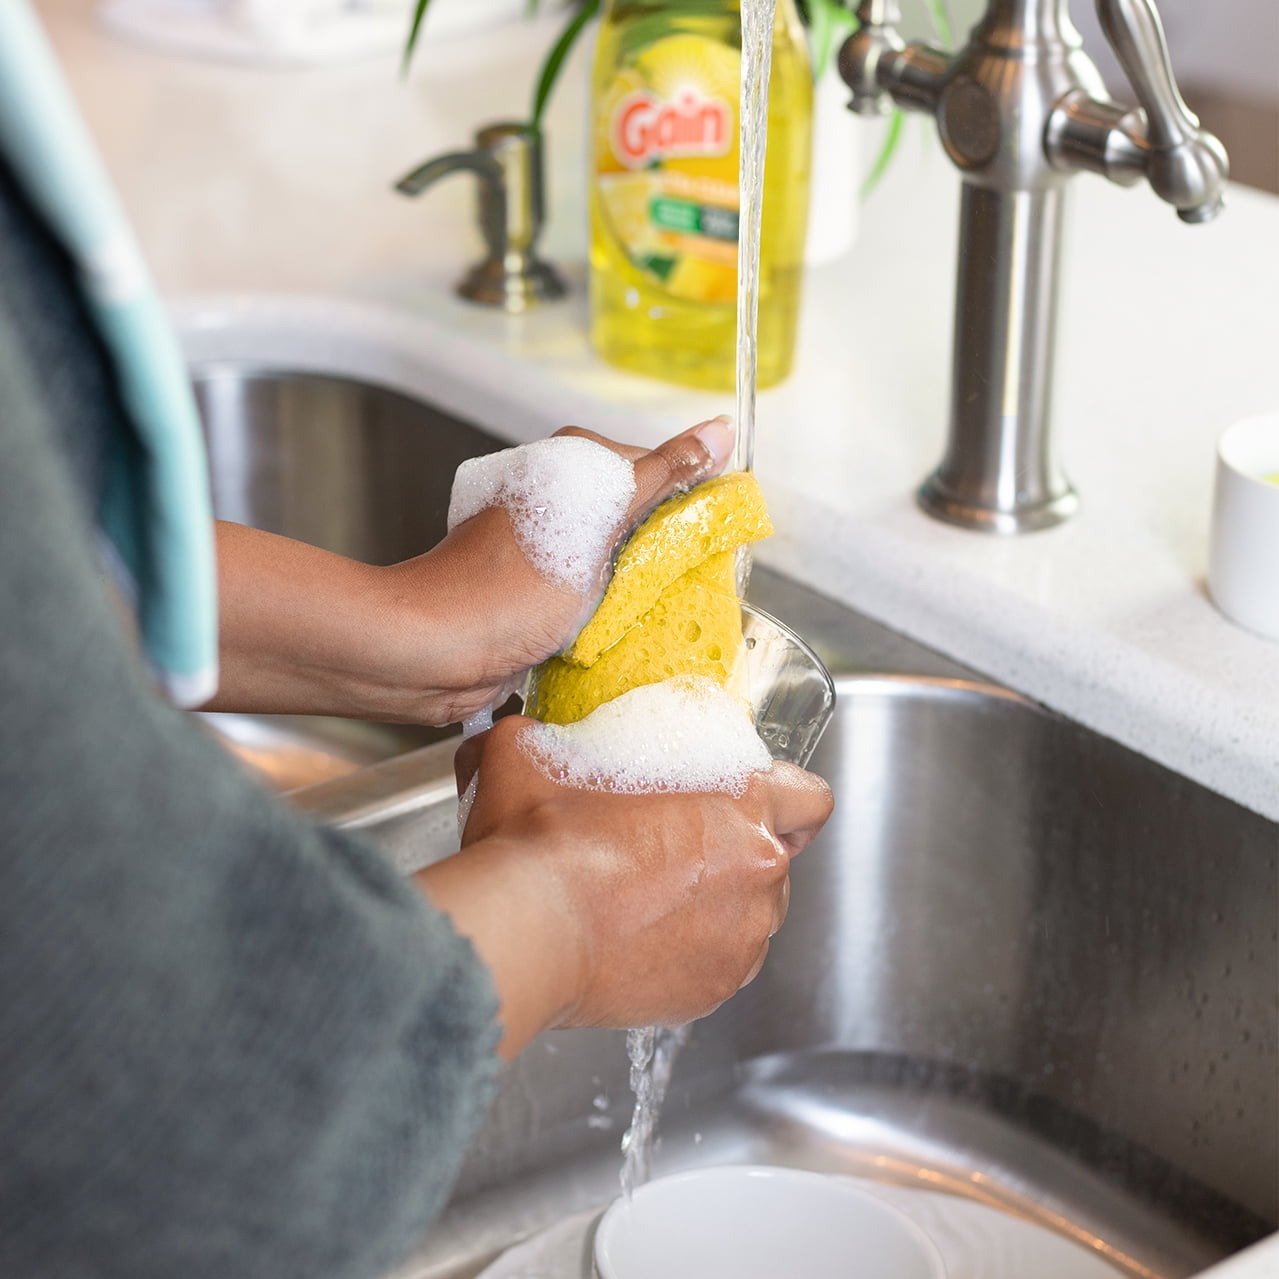 Gain Lemon Zest Dishwashing Liquid